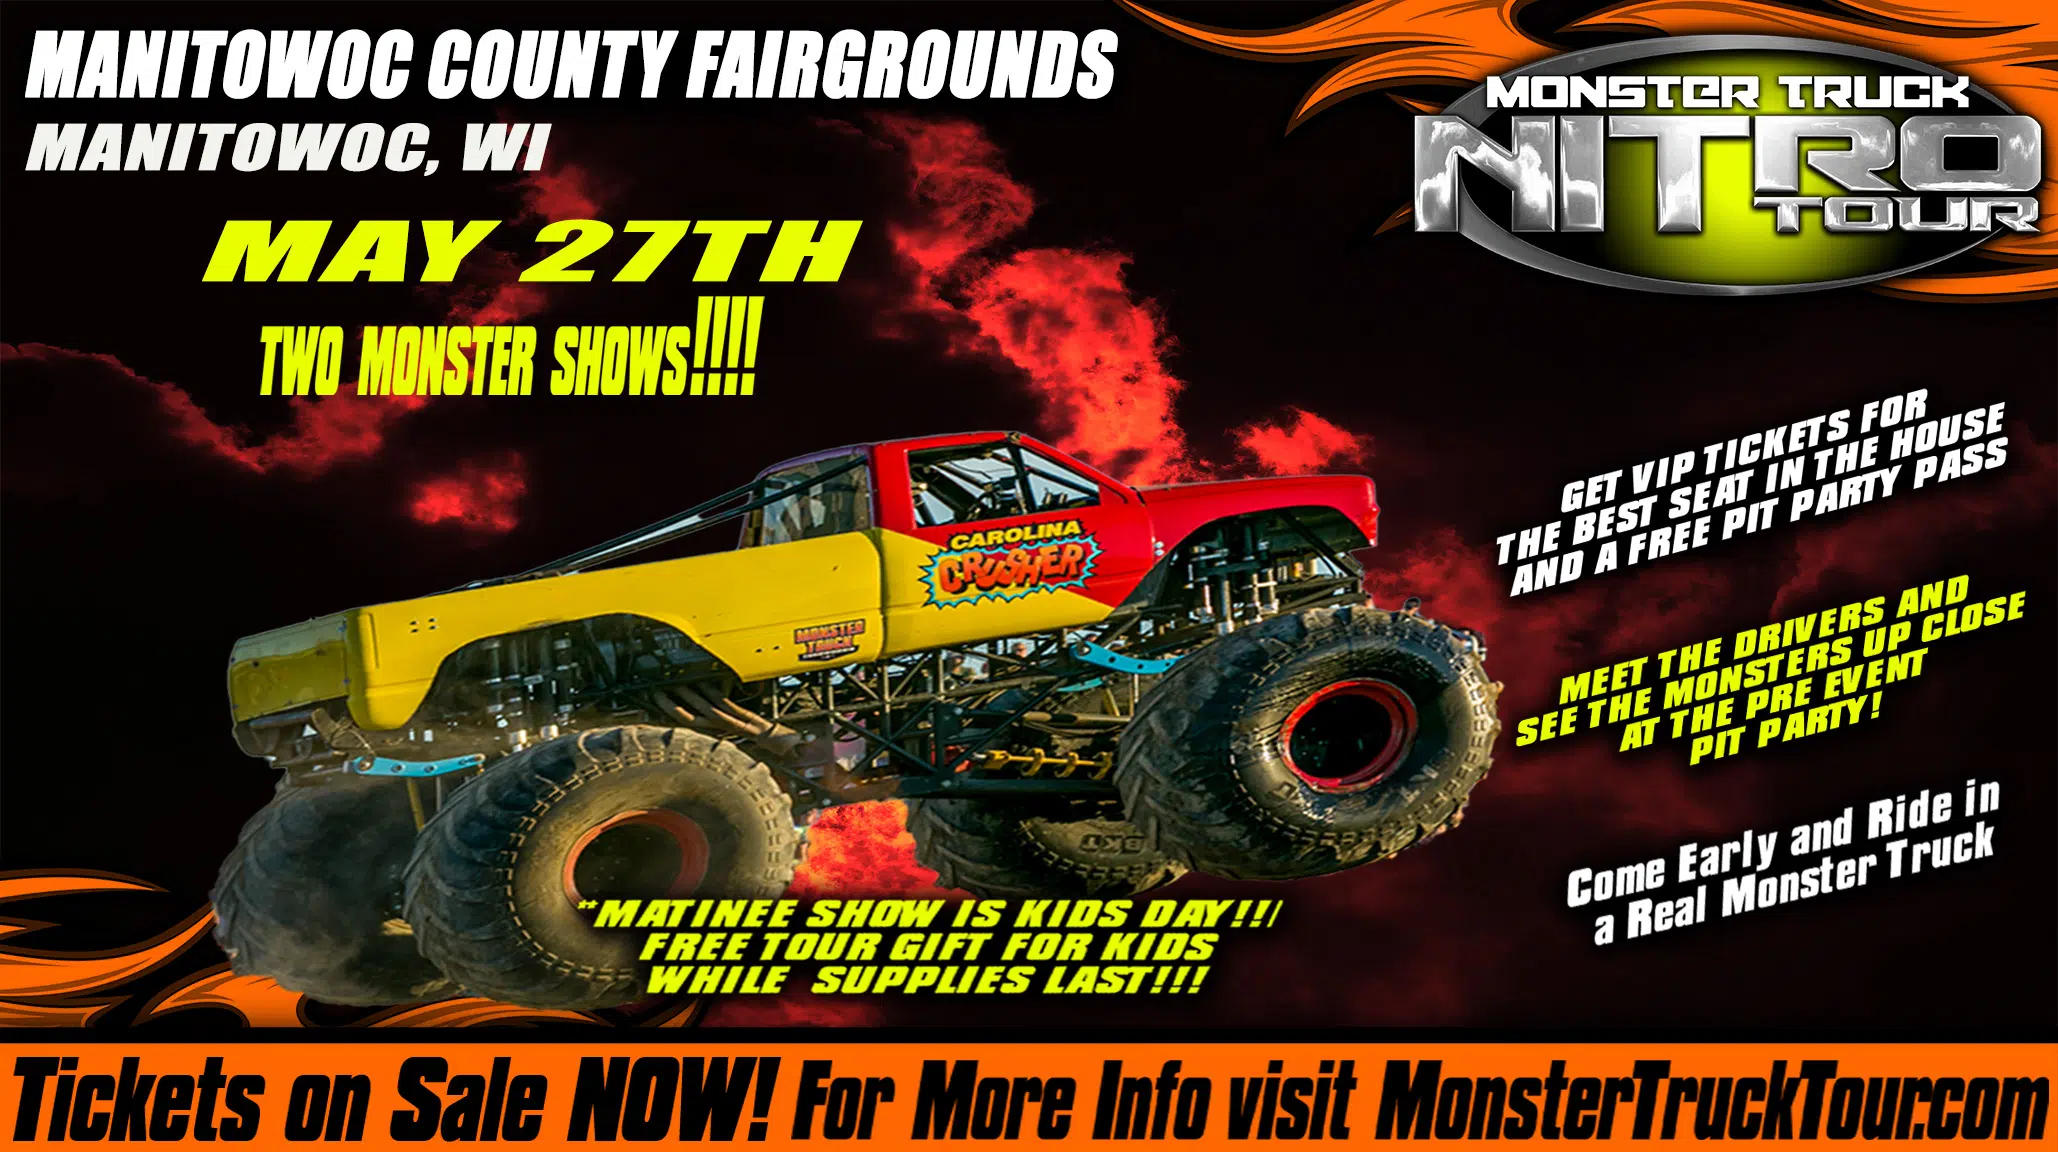 Monster Truck Nitro Tour at Missoula Fairgrounds - The Missoula Underground